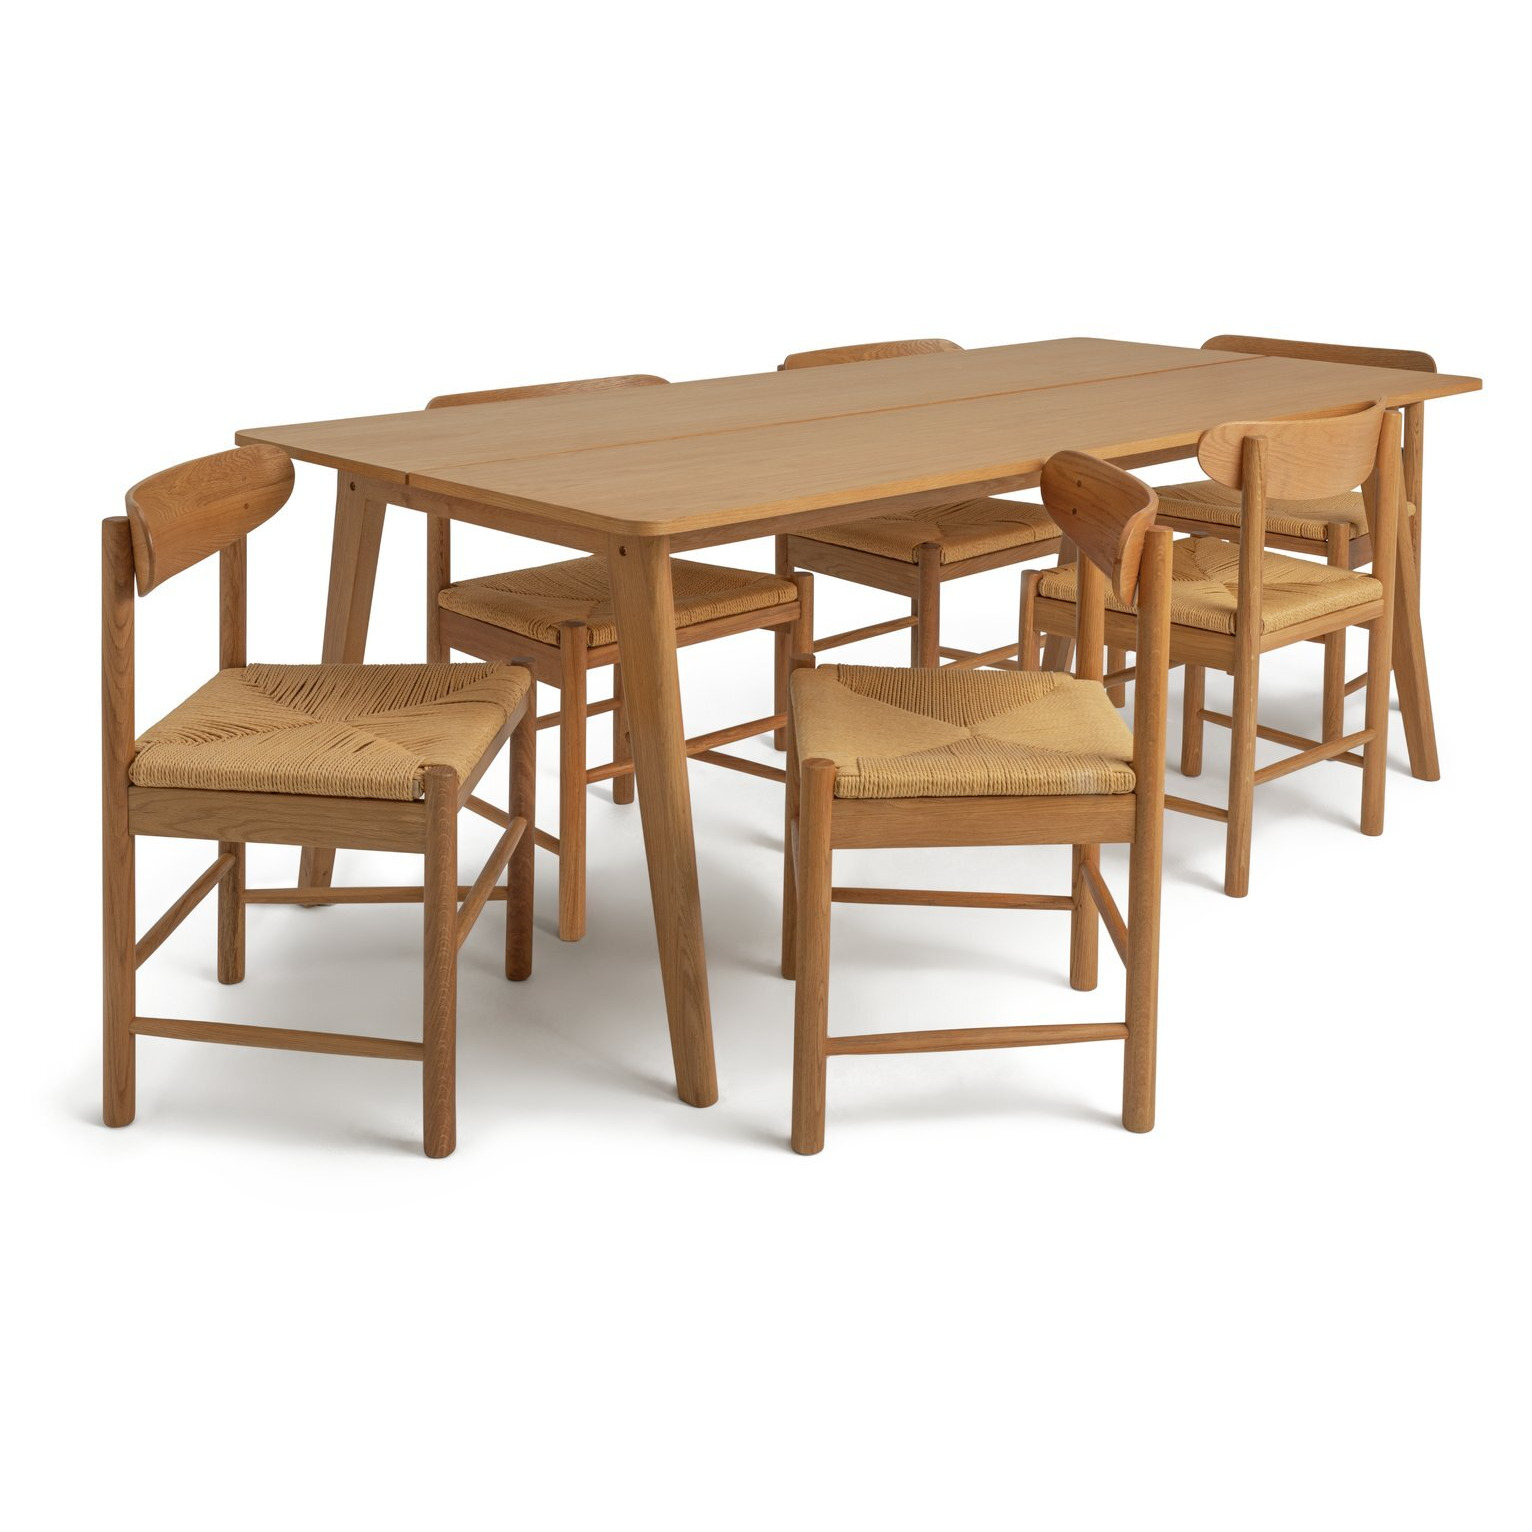 Habitat Nel Wood Effect Dining Table & 6 Hannah Oak Chairs - image 1